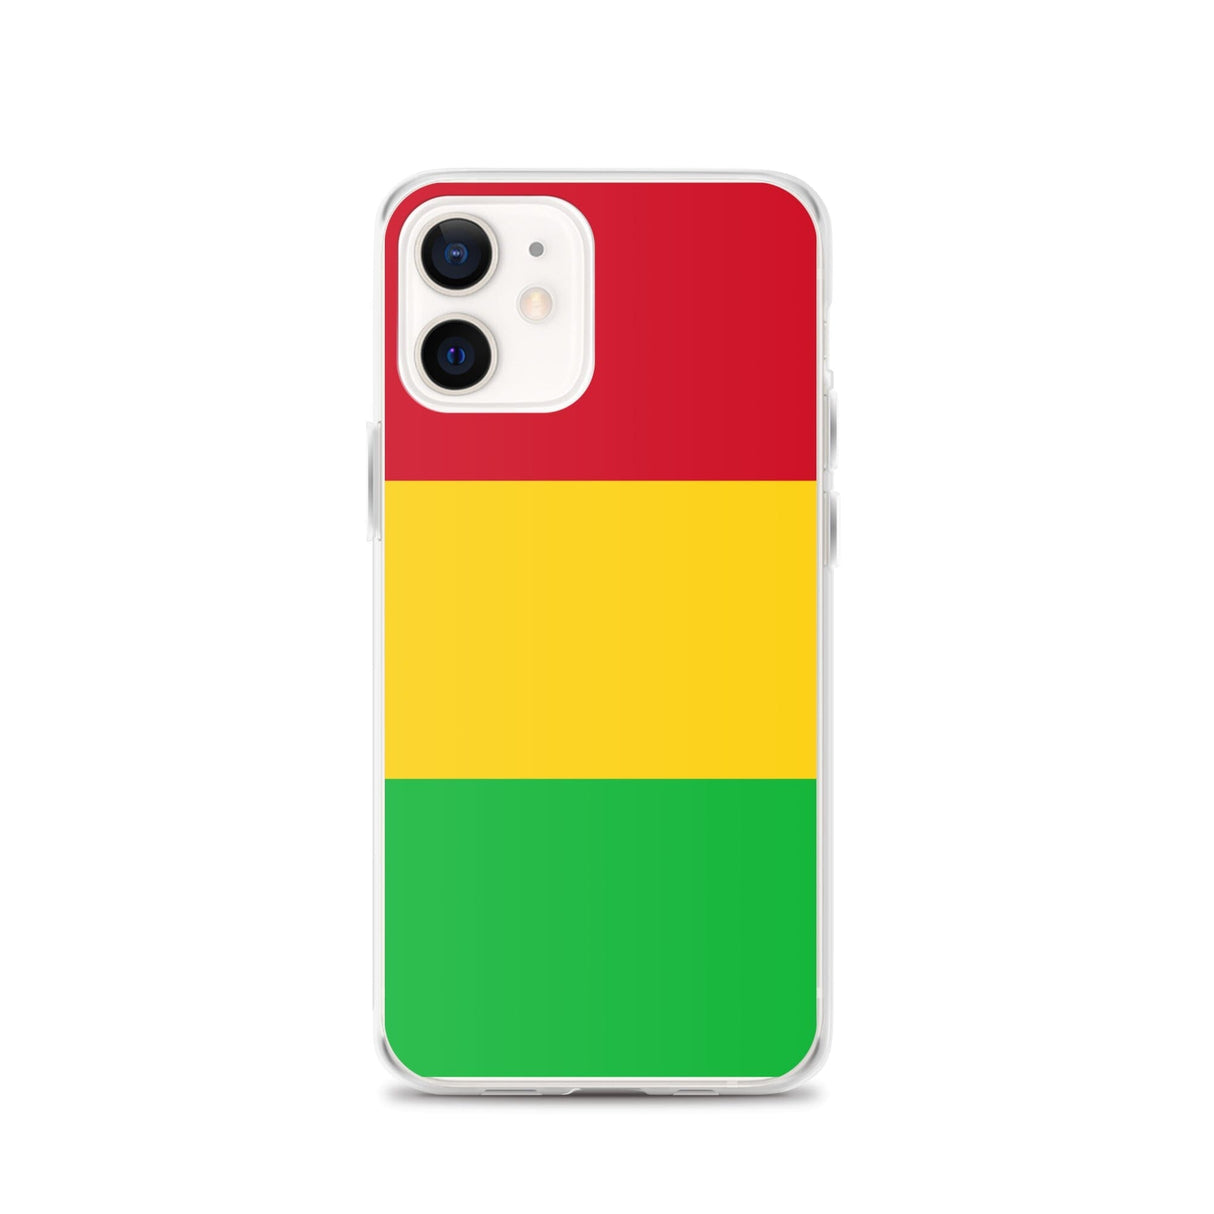 Flag of Mali iPhone Case - Pixelforma